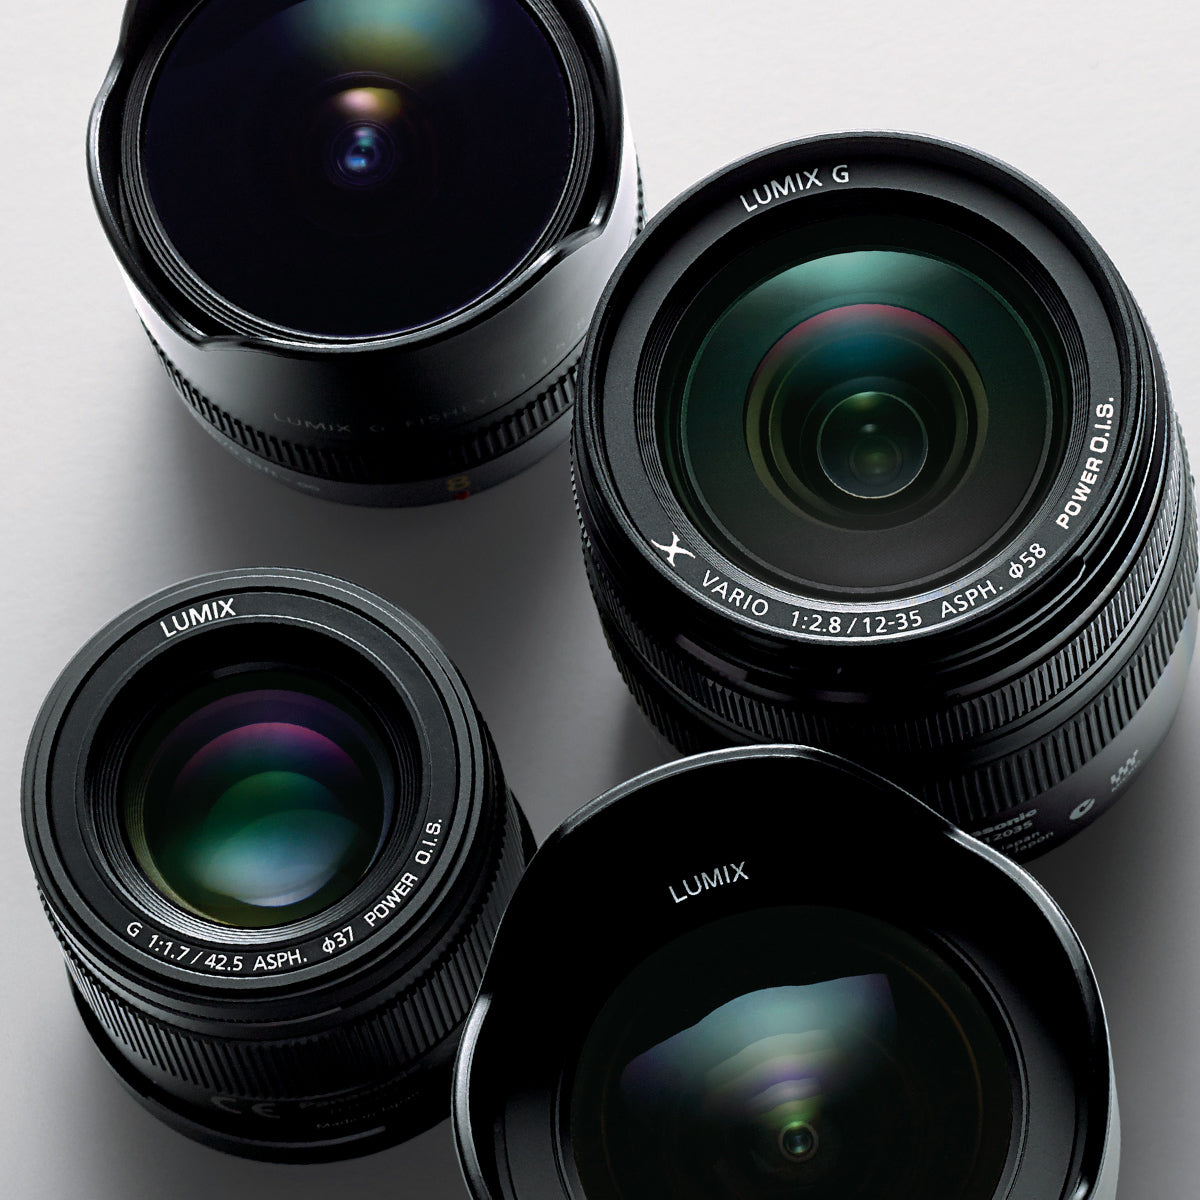 Panasonic LUMIX S5II Mirrorless Camera with 20-60mm F3.5-5.6 L Mount Lens  Black DC-S5M2KK - Best Buy